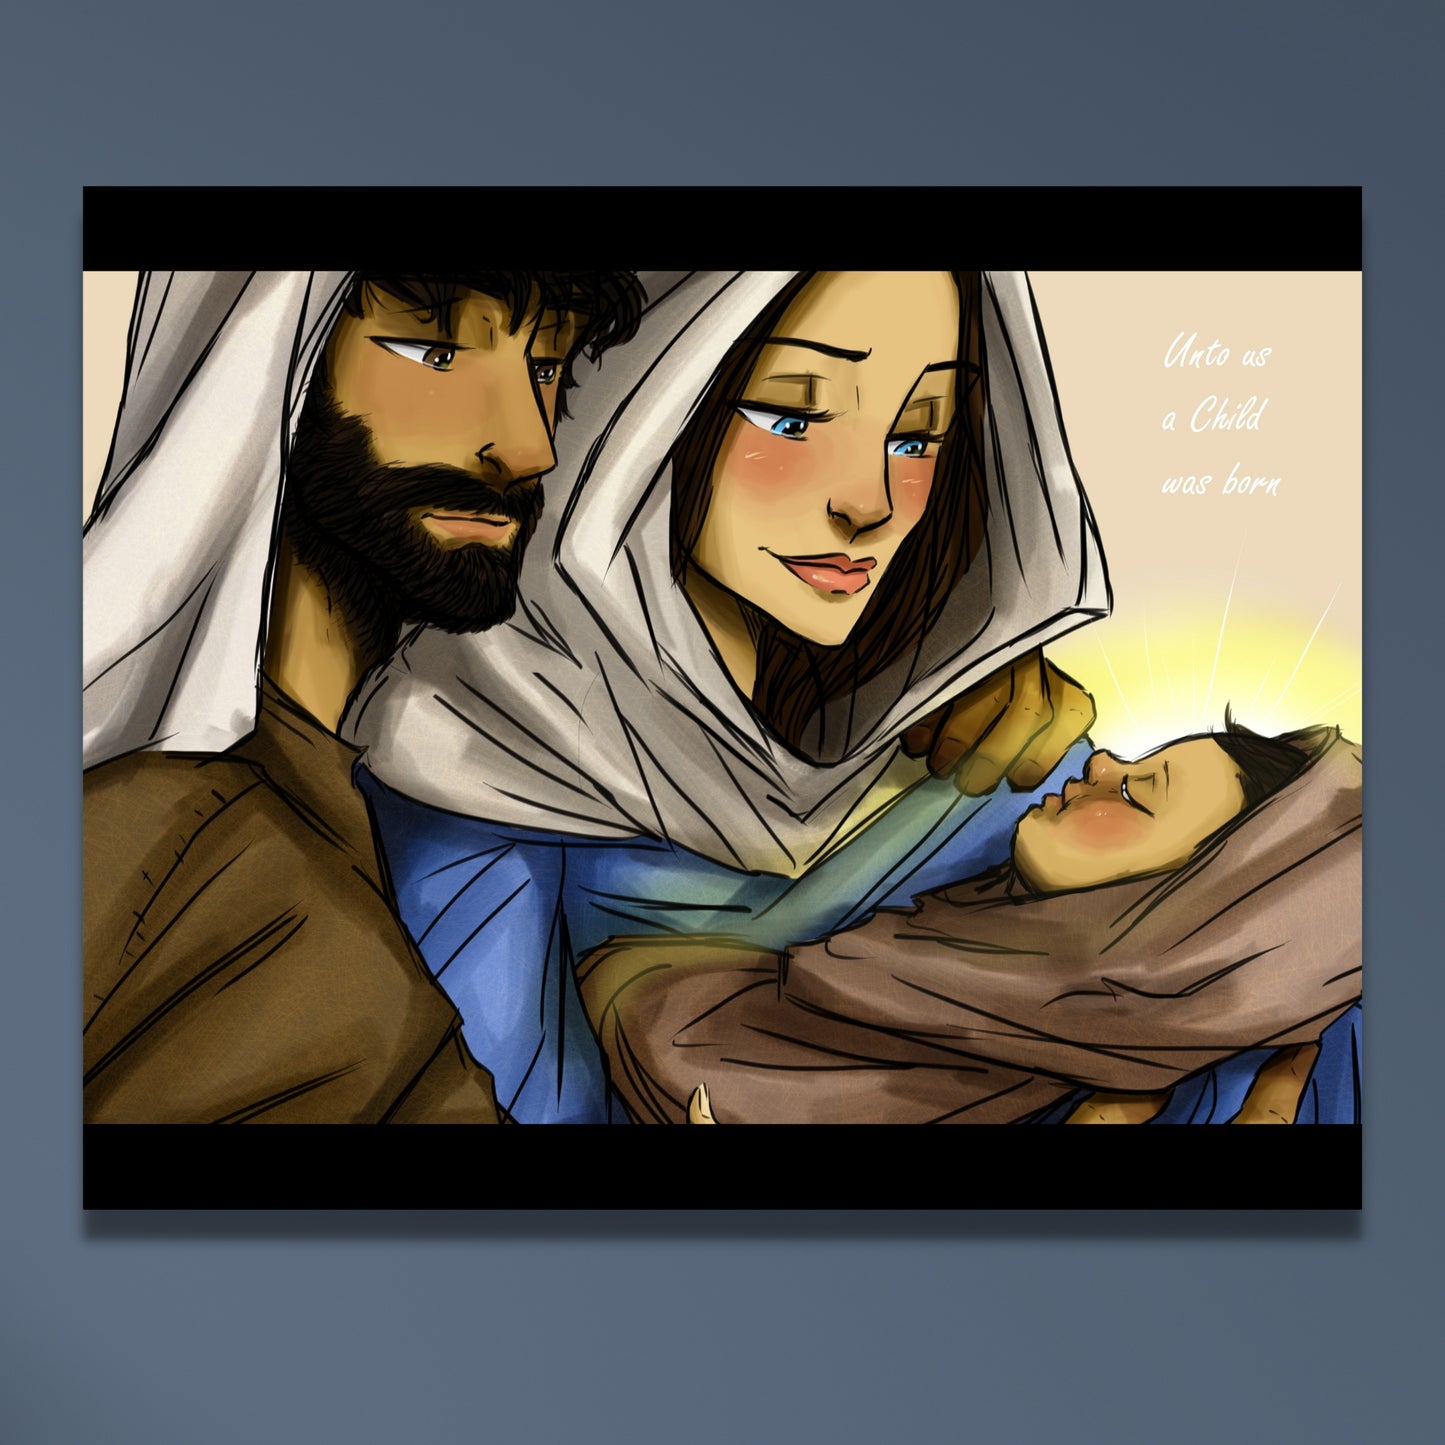 Baby Jesus, Mary, & Joseph Original Art - Inspirational Art Canvas Print (20x16)